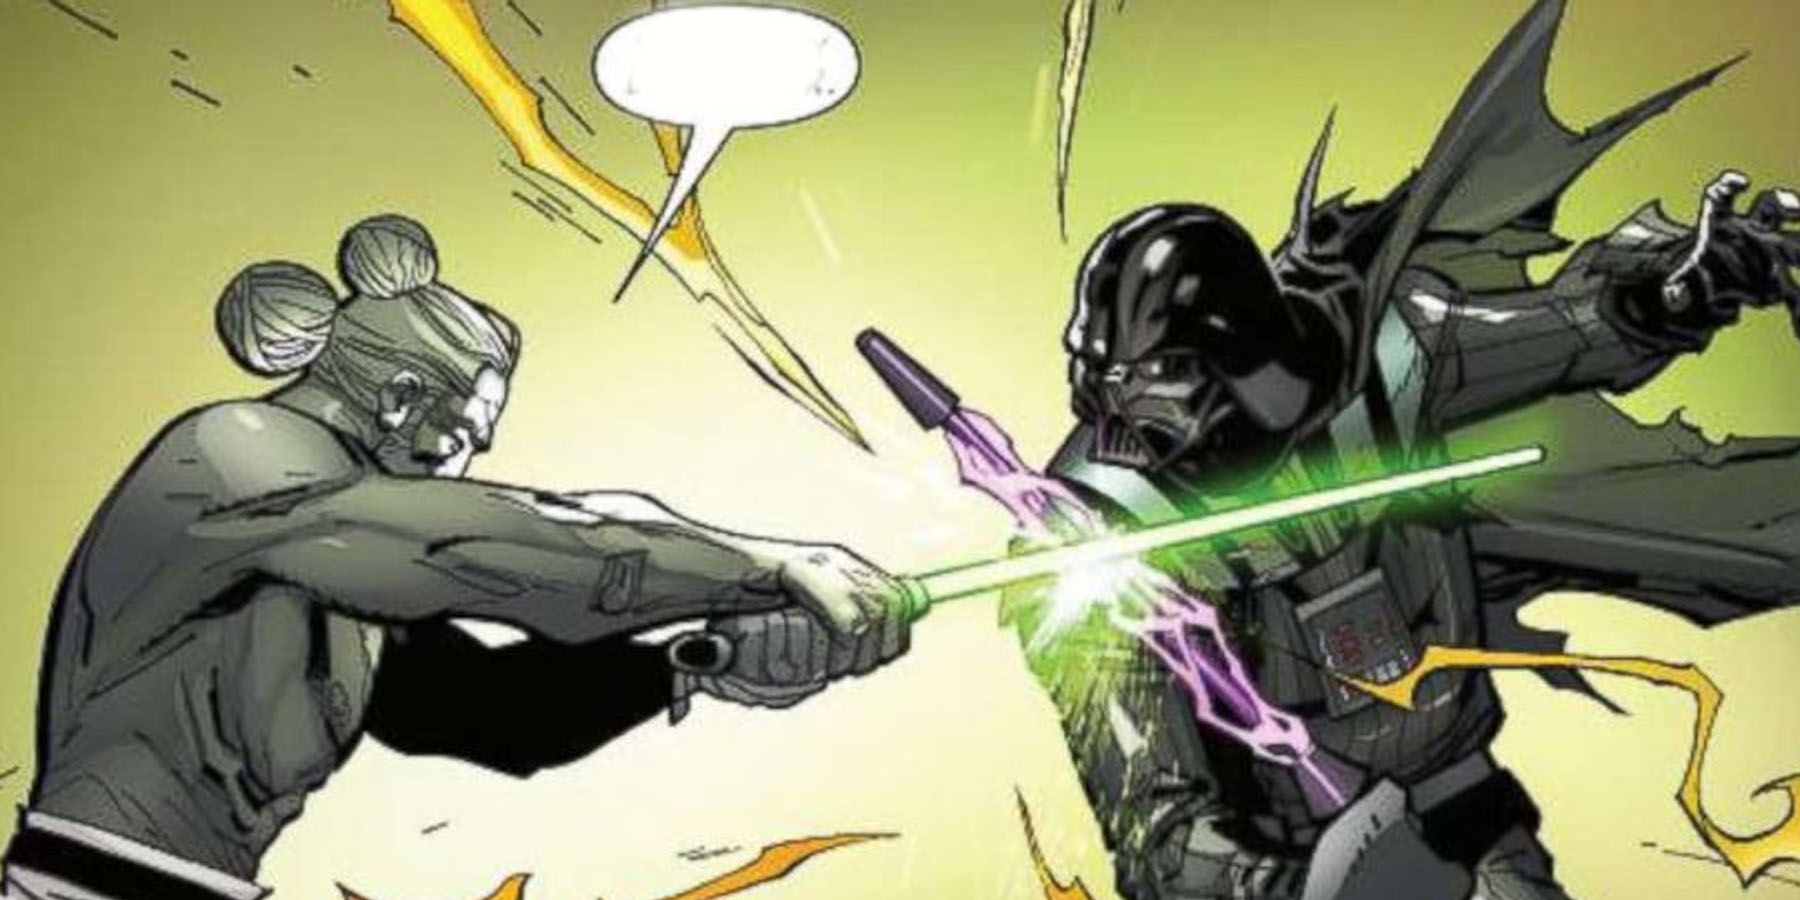 Darth Vader clashing with a Jedi Master